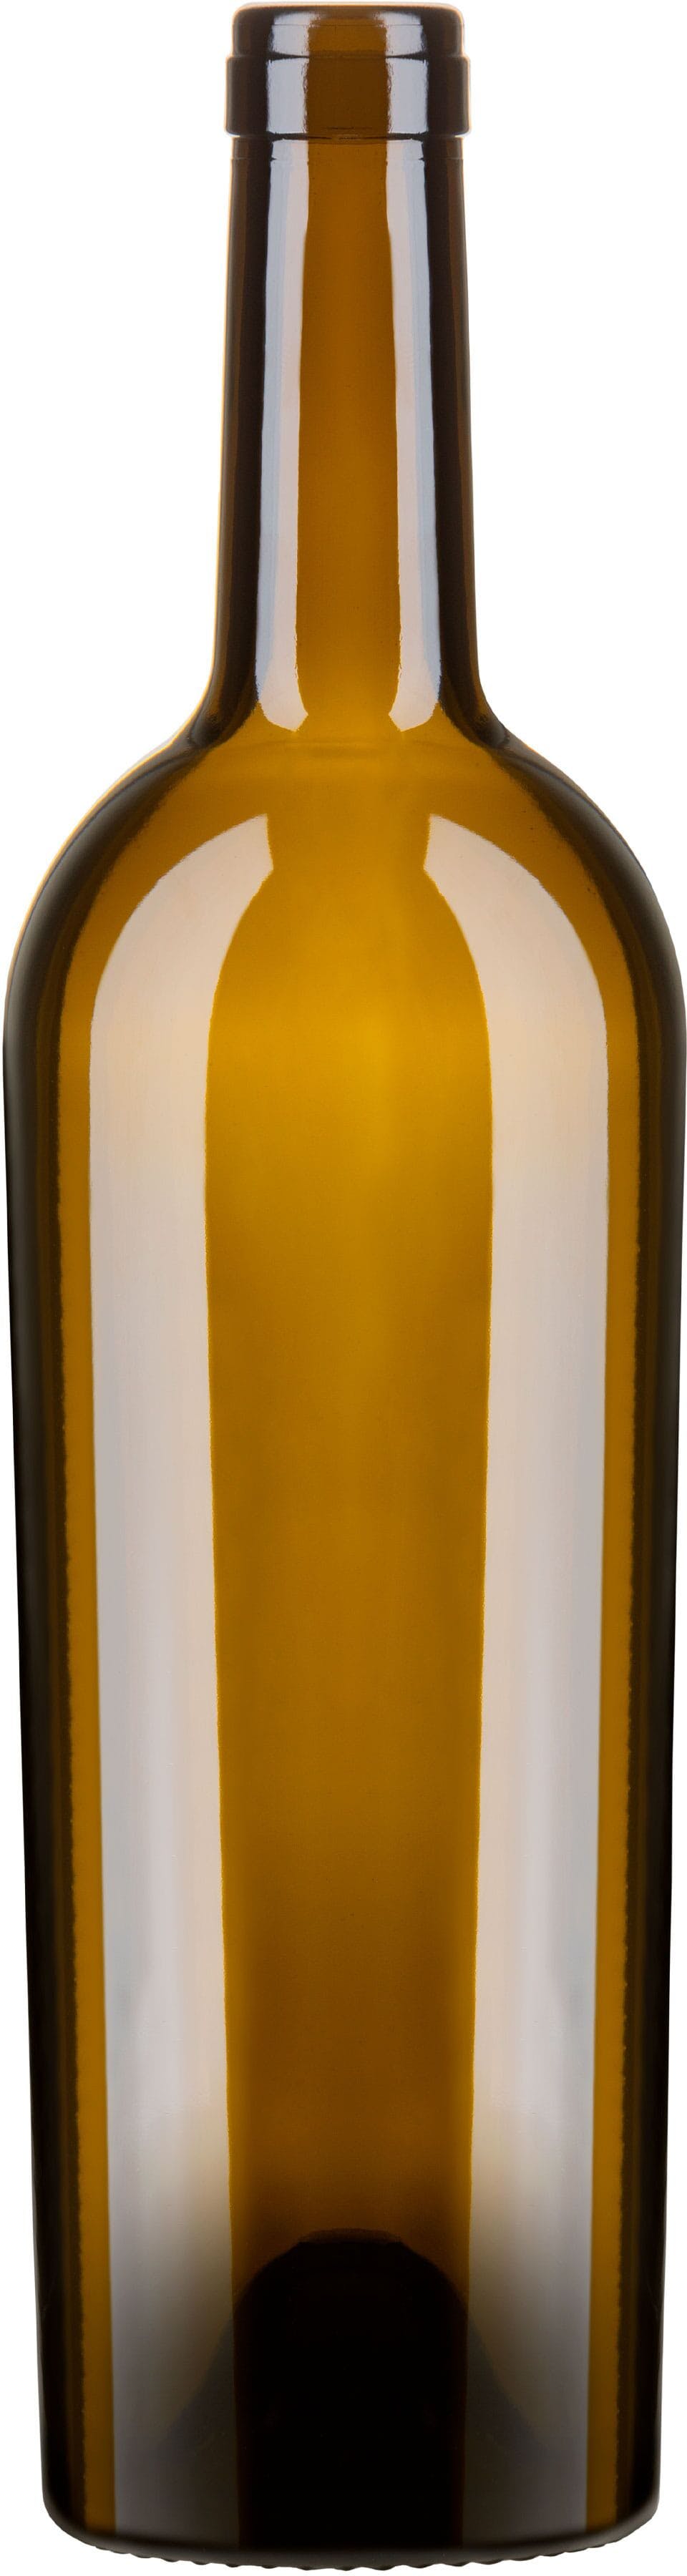 Botella BORDELESA ANCIENNE 750 ml BG-corcho